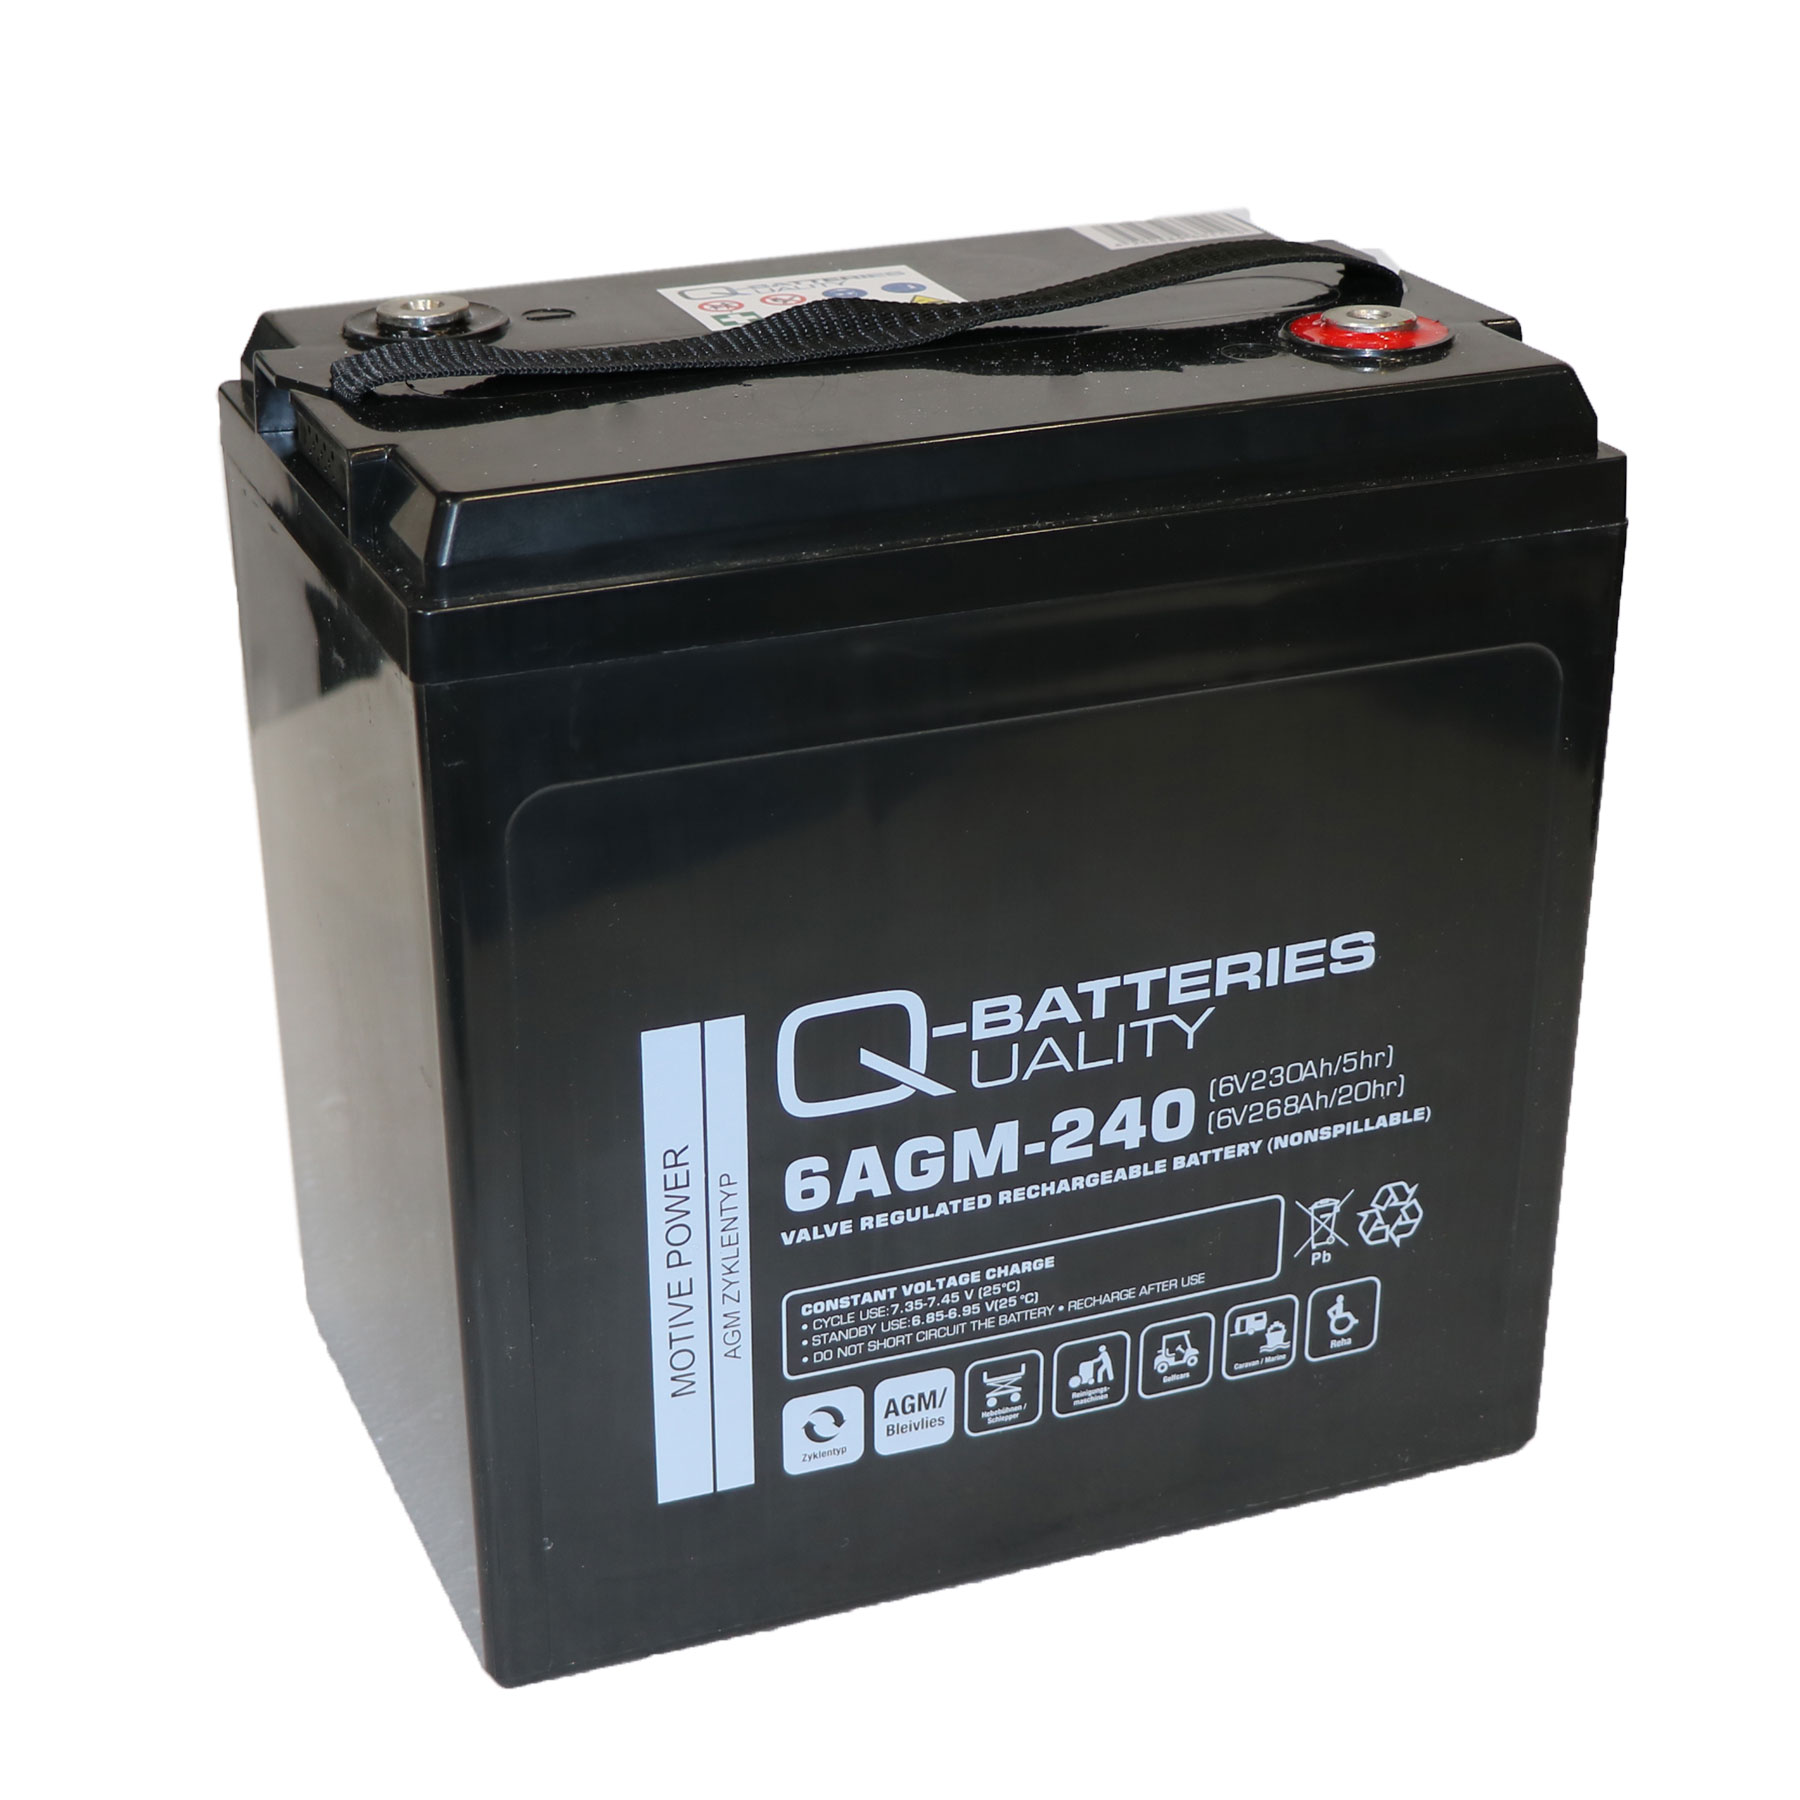 Q-Batteries 6AGM-240 Traktionsbatterie 6V 230Ah (5h) 268Ah (20h), wartungsfreier AGM-Akku VRLA